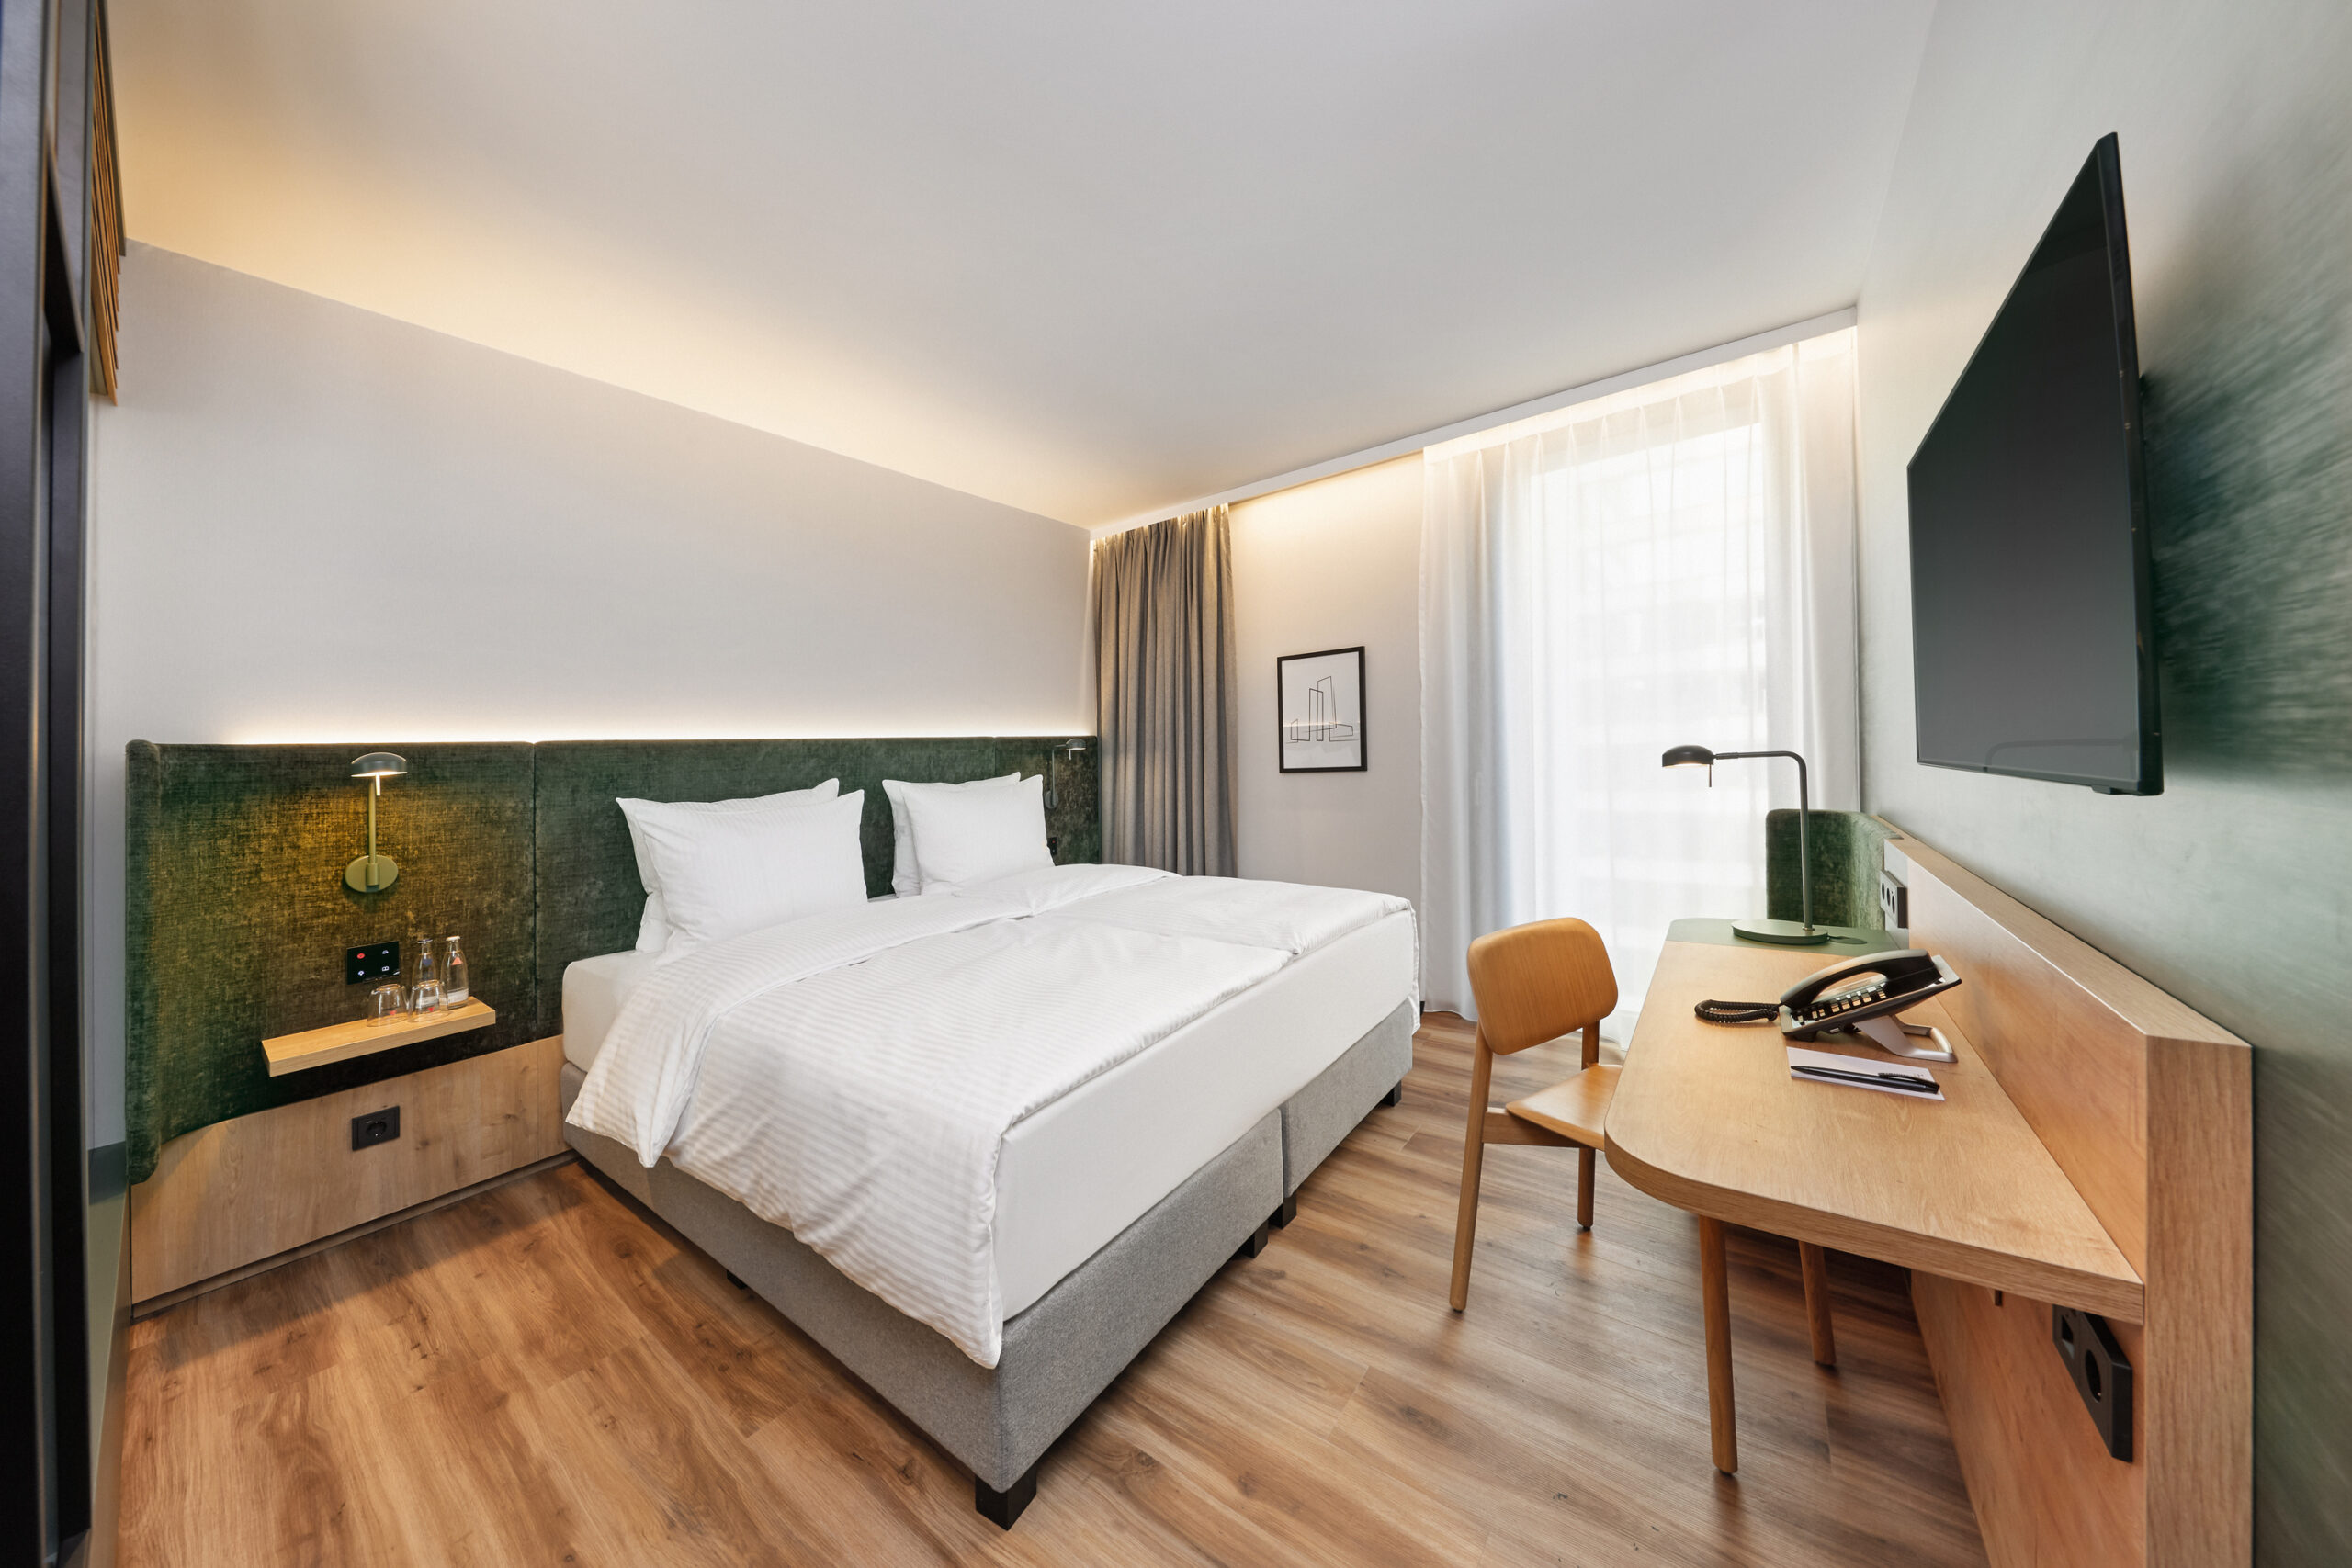 h-hotels_zimmer-komfort-doppelzimmer-01-hplus-hotel-frankfurt-eschborn_L-max.-3000px-_65b2ee97_